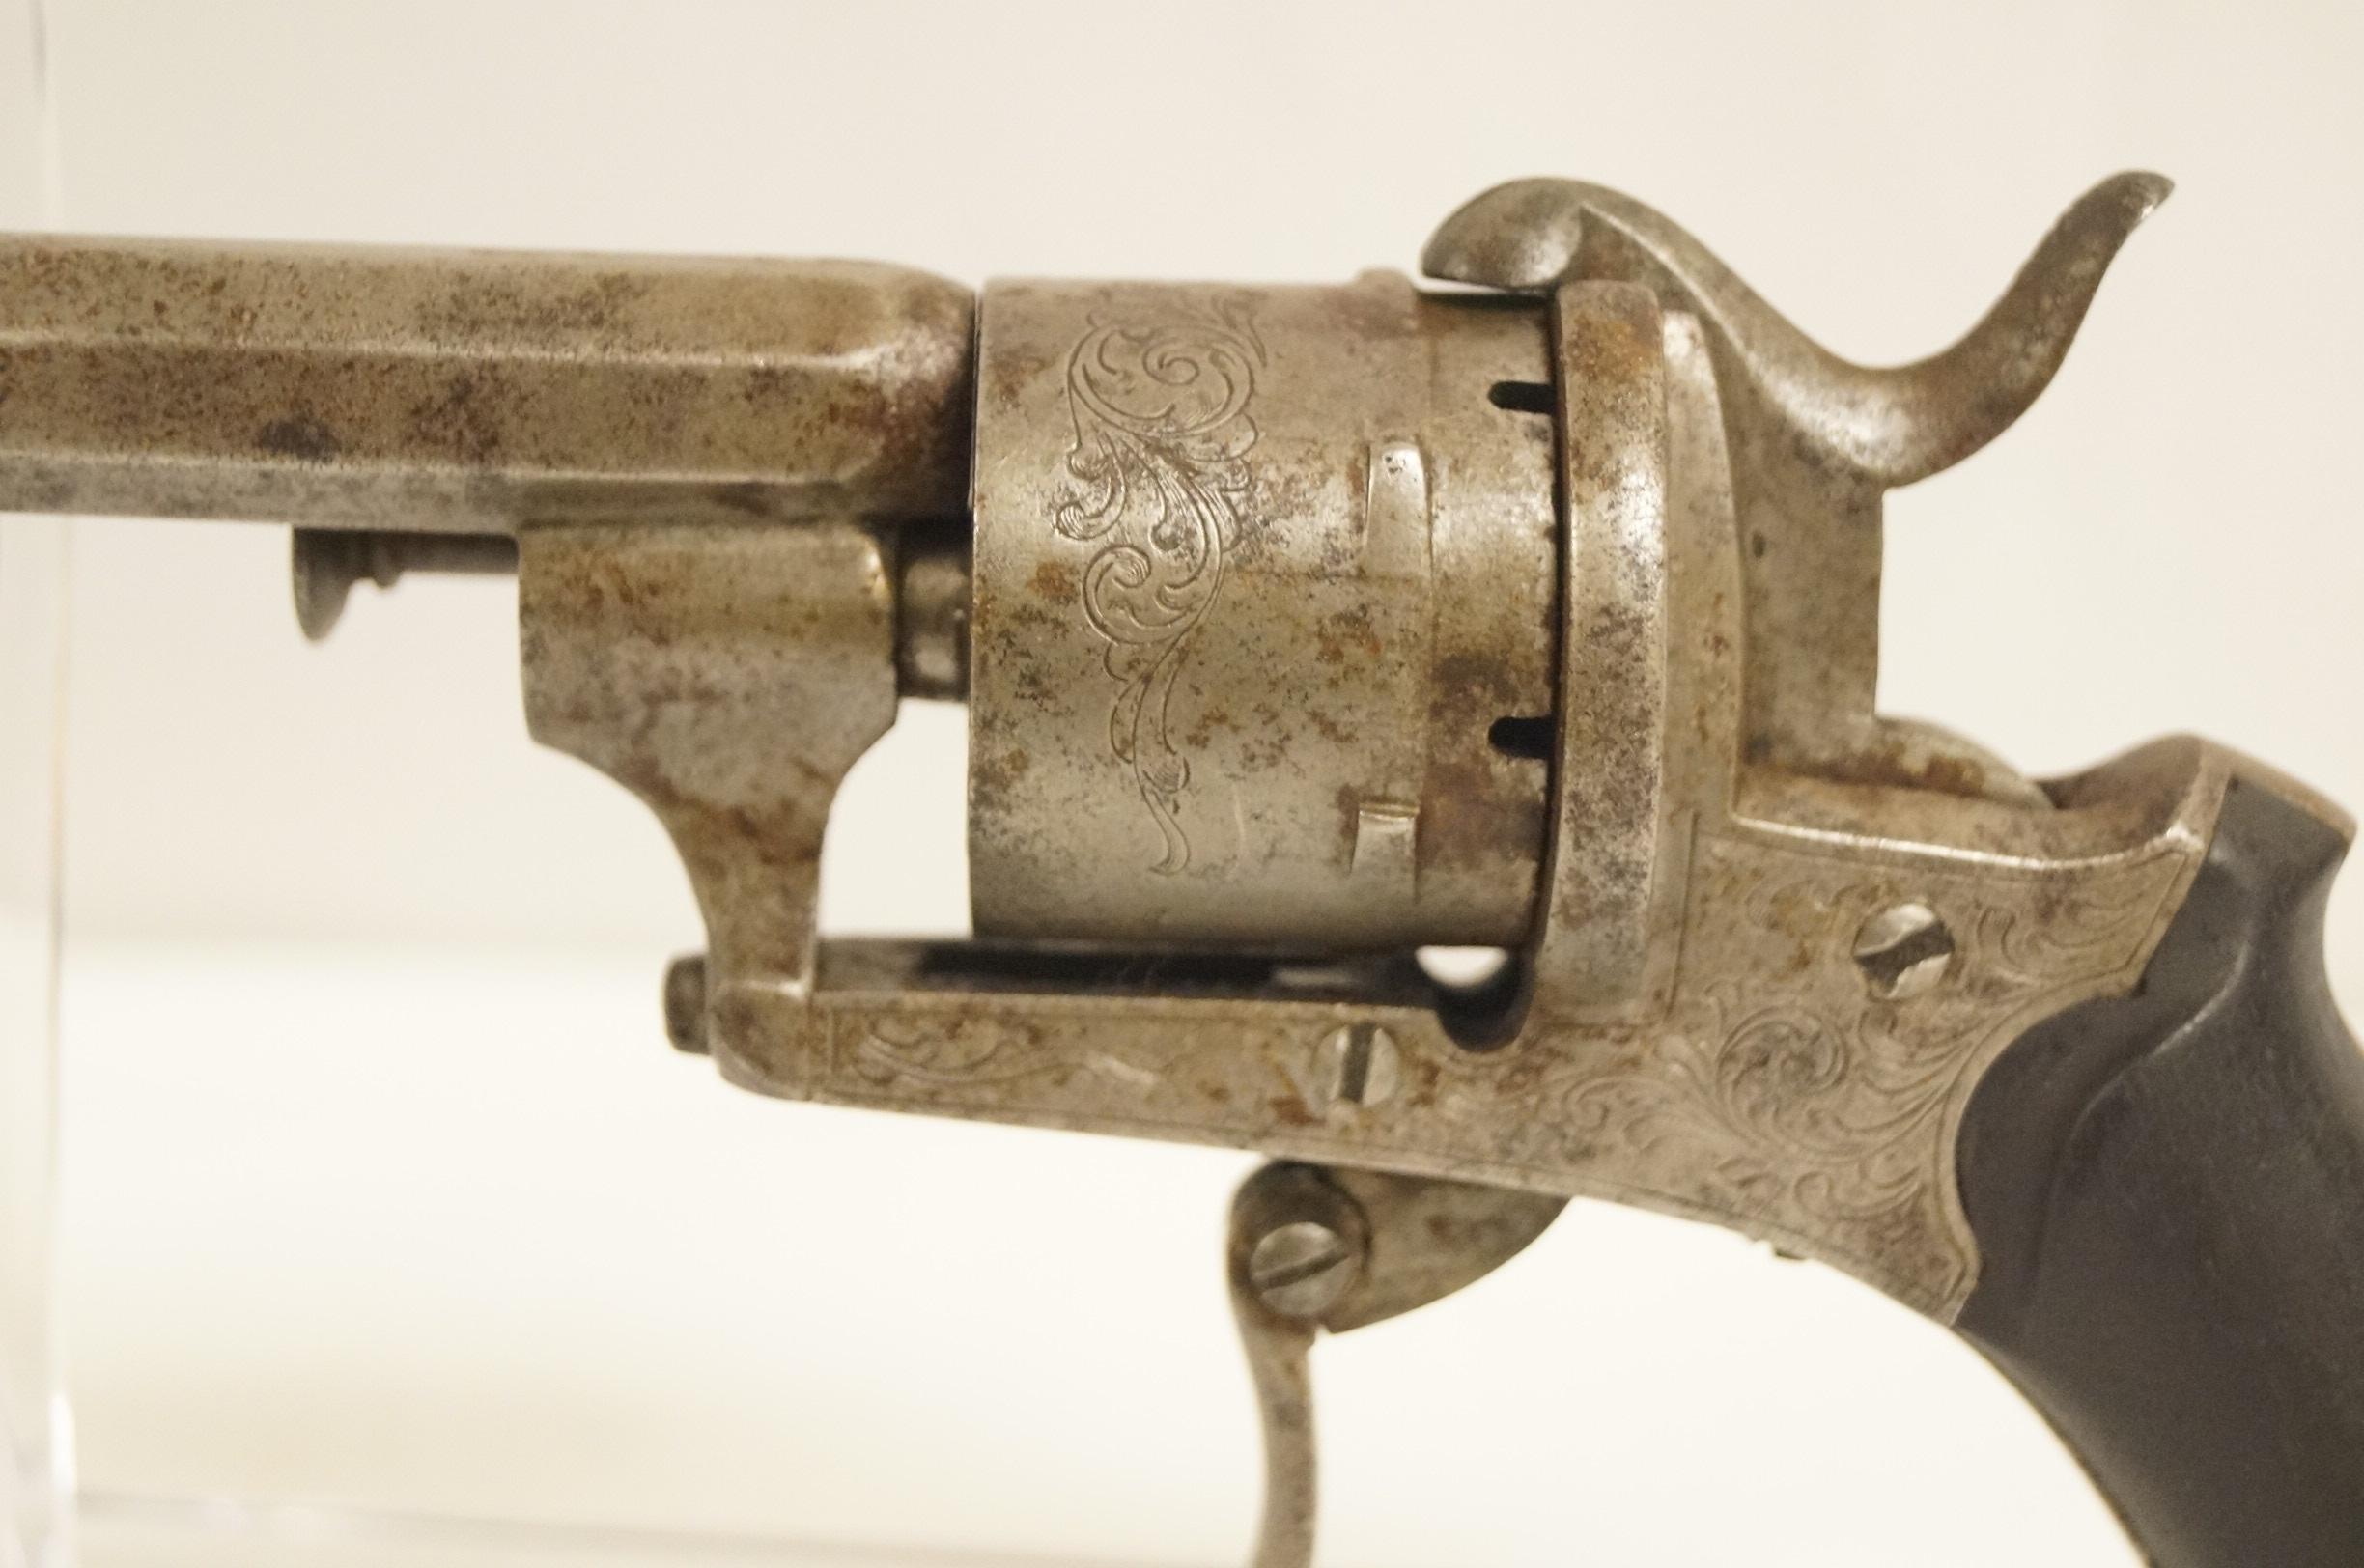 Beautifully Engraved Antique Belgian Lefaucheux Folding Trigger Pinfire Revolver